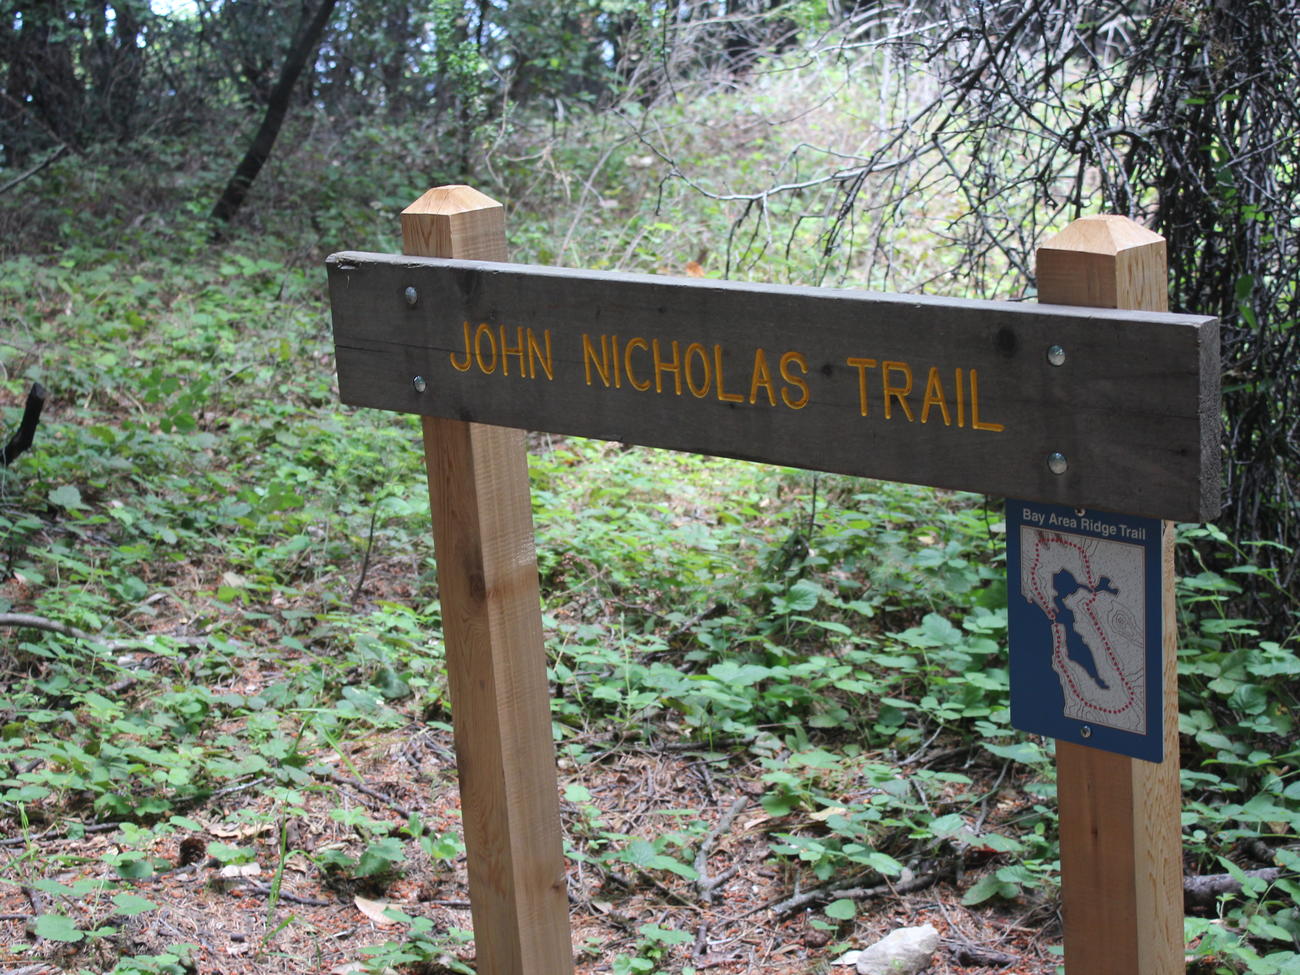 Where to hike this weekend: the new John Nicholas Trail